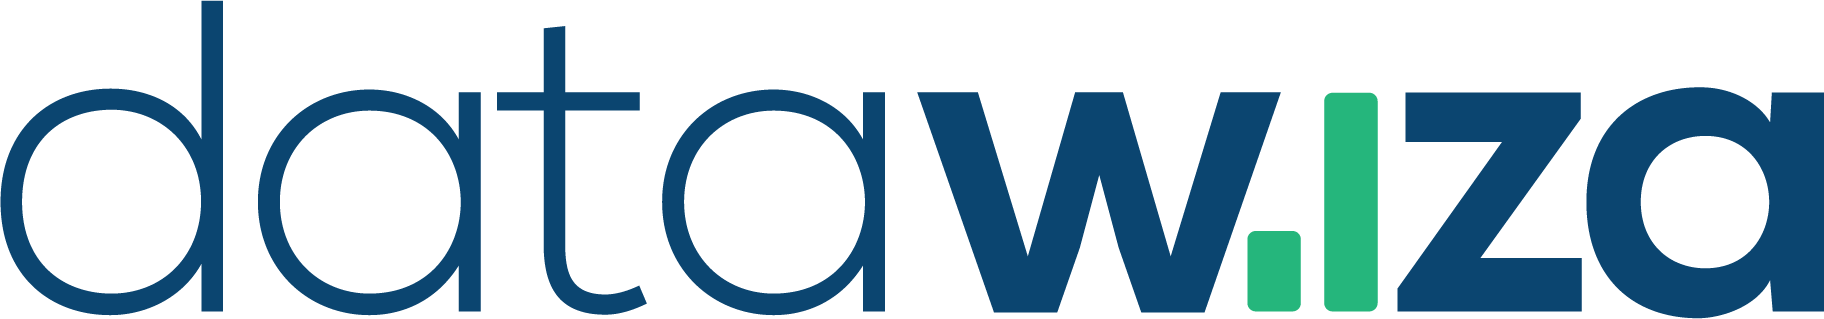 logo_datawiza_blue.png